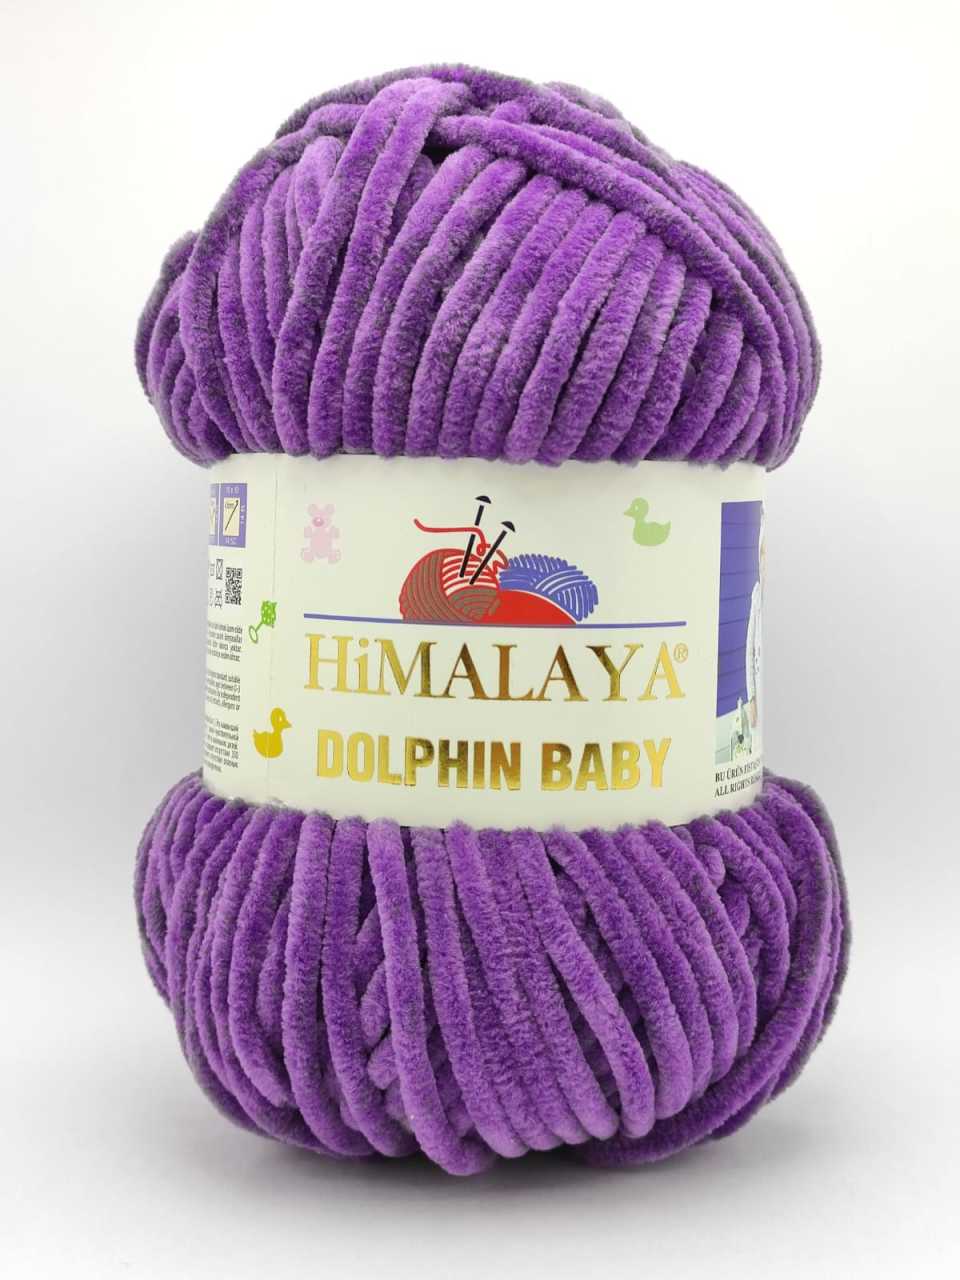 Himalaya Dolphin Baby 80340